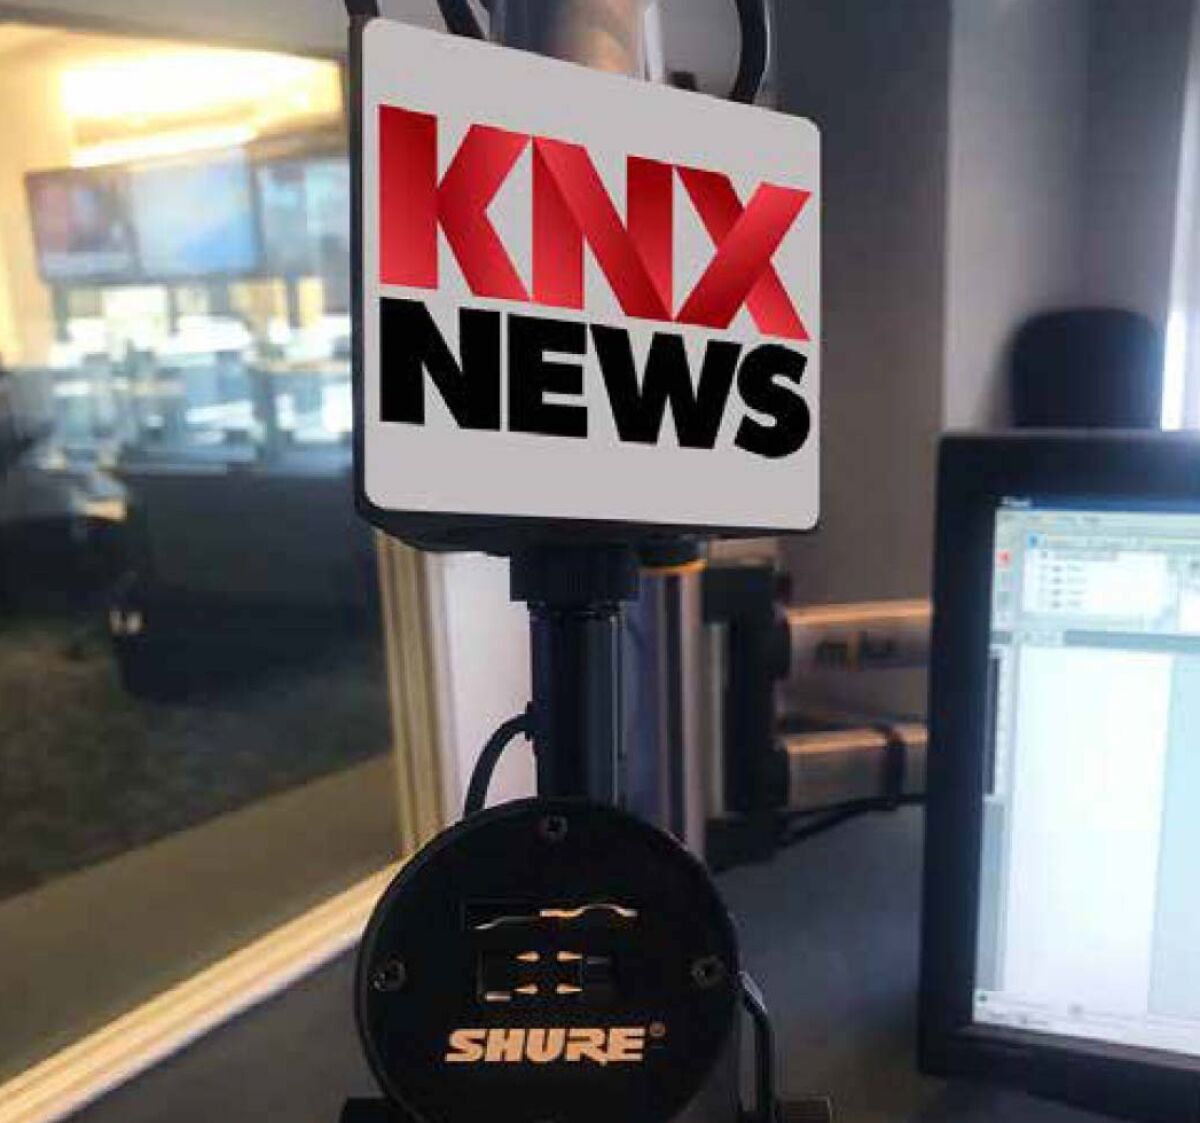 All-news radio station KNX is adding an FM simulcast starting Monday.